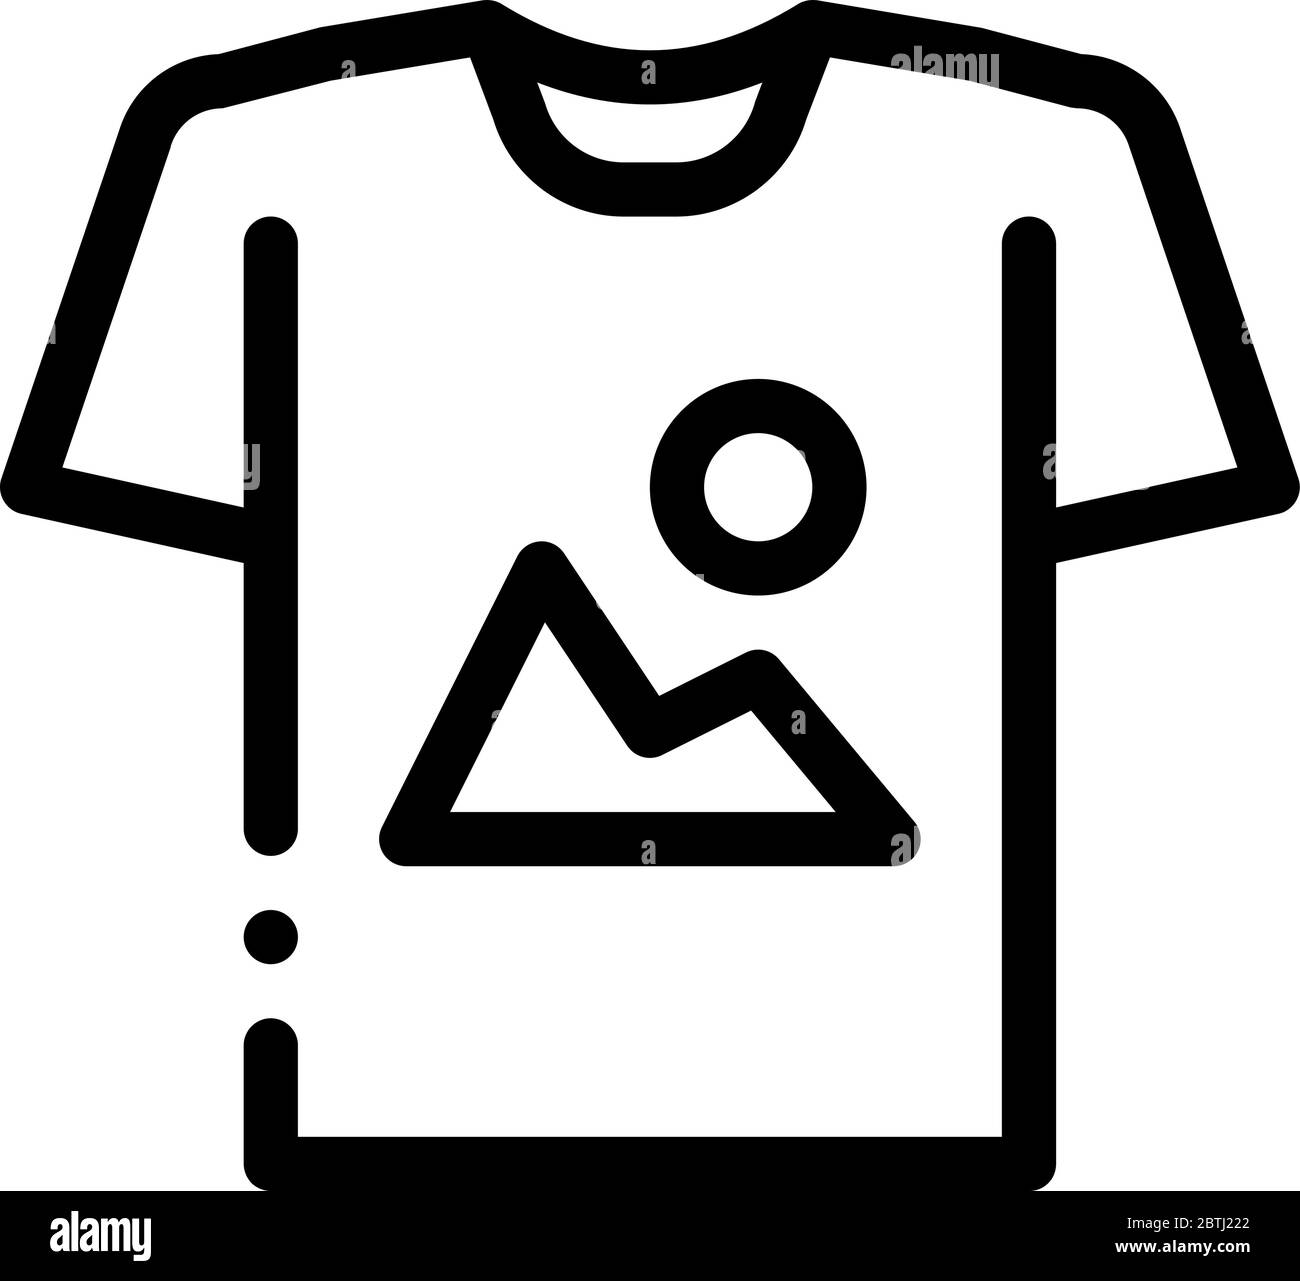 T shirt printing machine Black and White Stock Photos & Images - Alamy